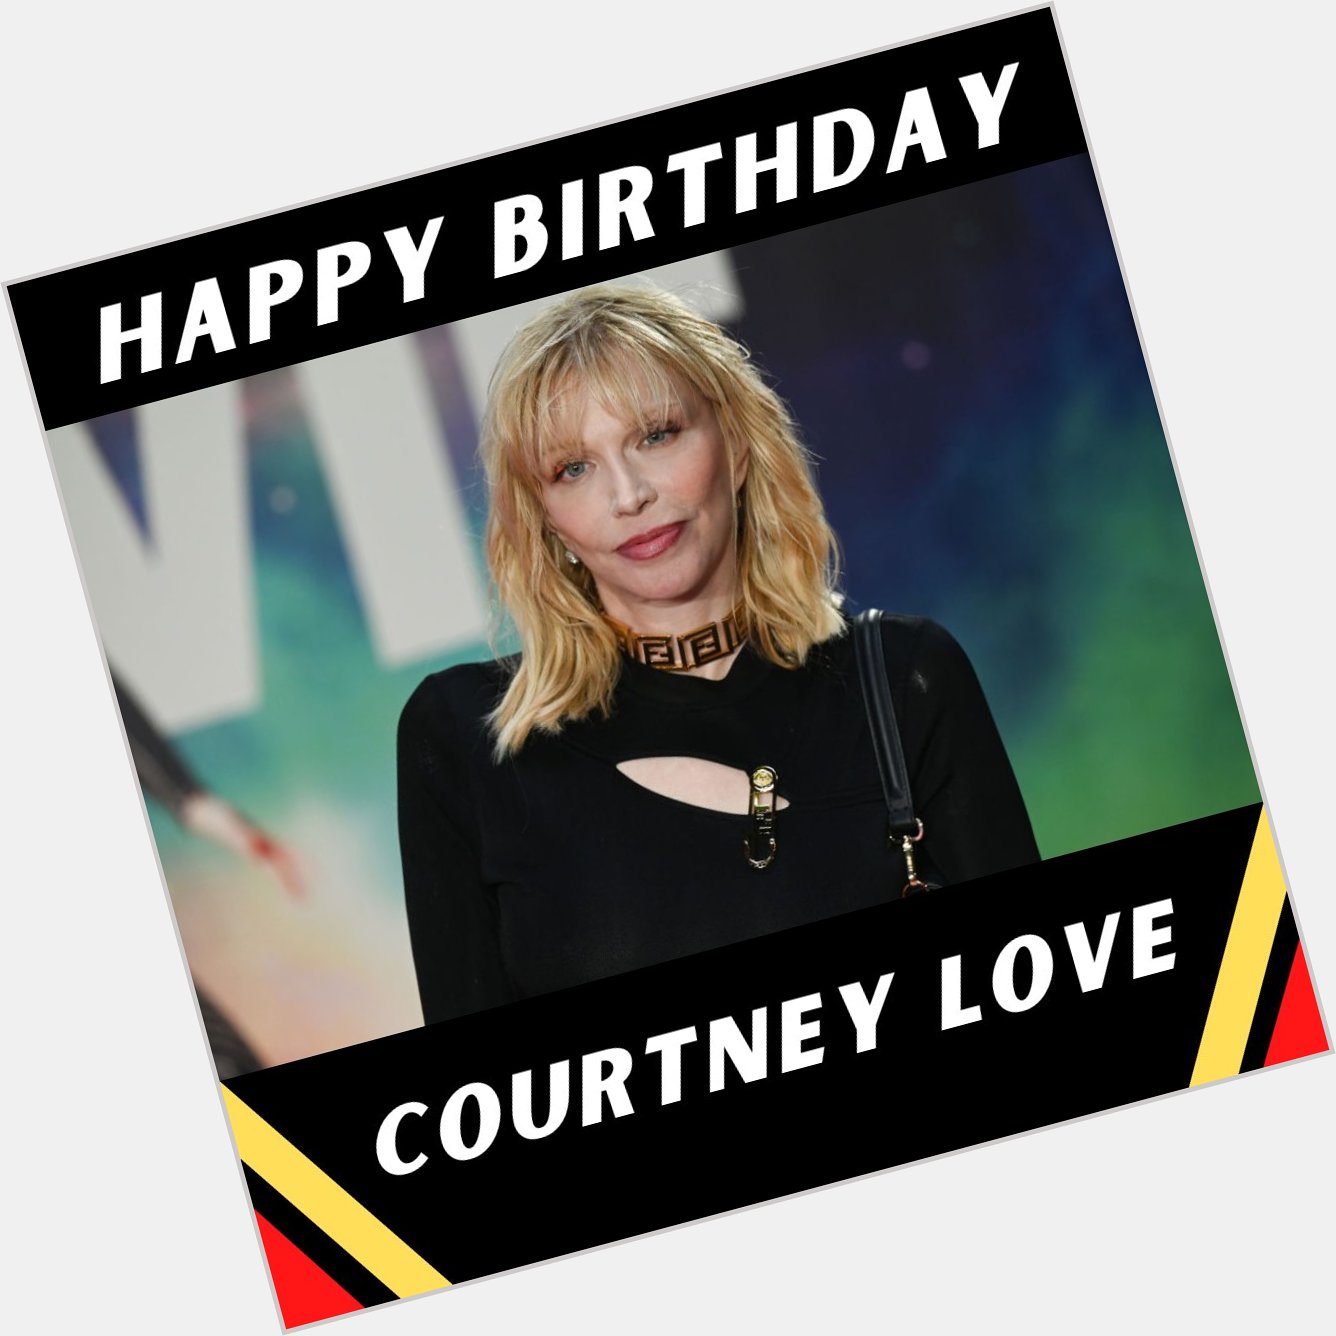 Wishing a happy birthday to Courtney Love Stuart C. Wilson/Getty Images 